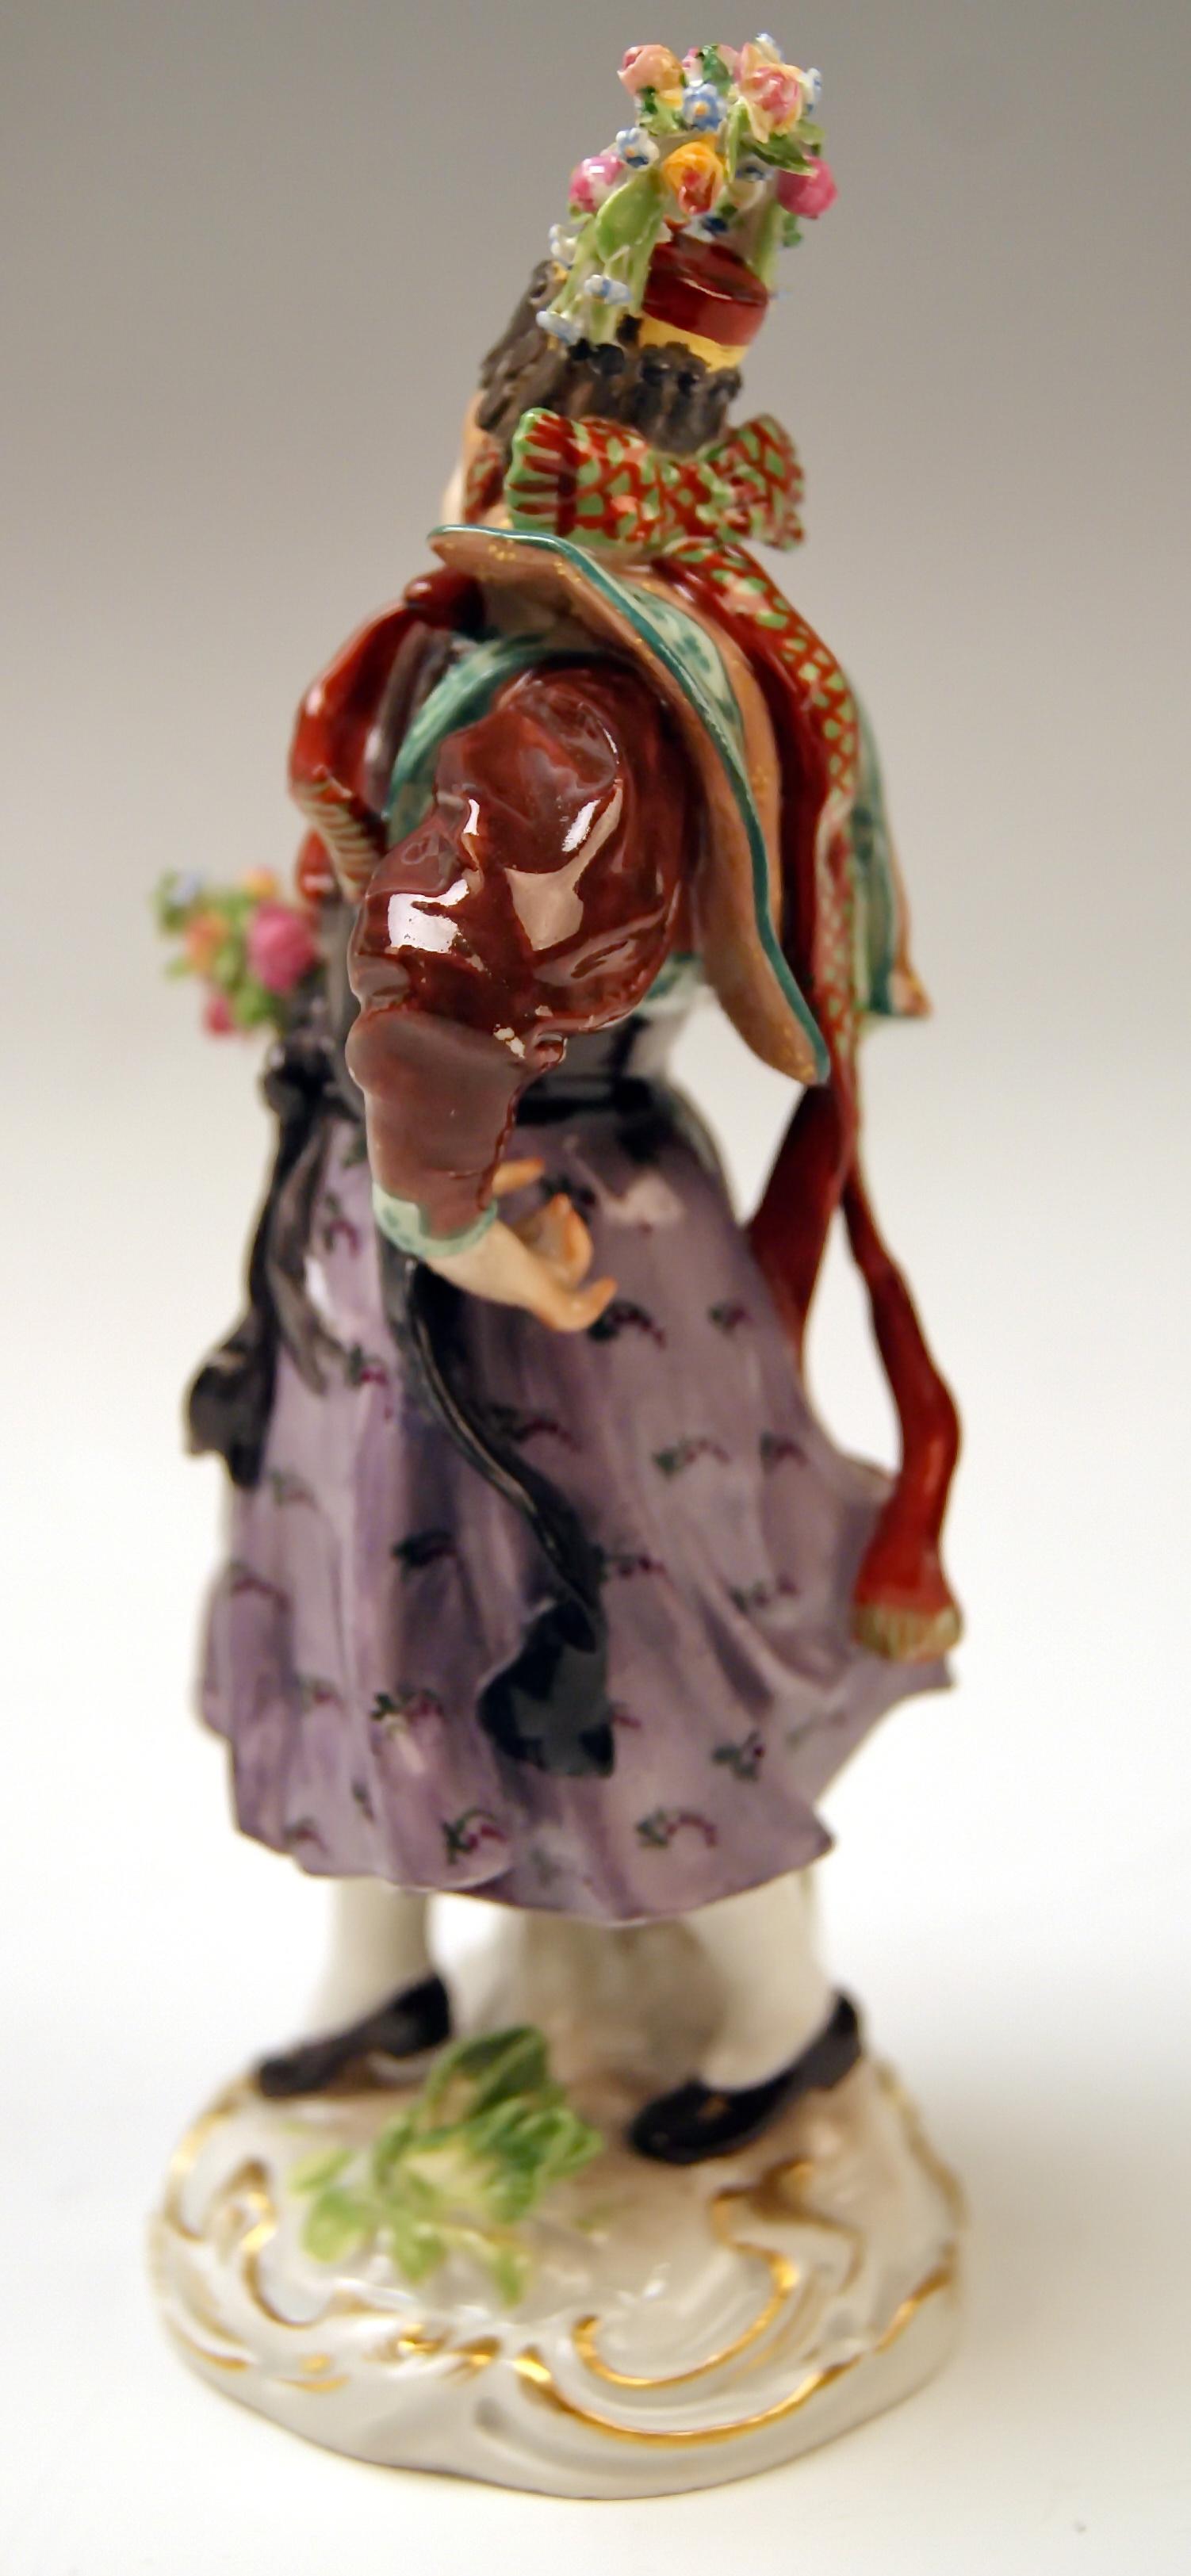 German Meissen Figurine Peasant Woman Hormetjungfer Model Q 190 B by Hugo Spieler, 1900